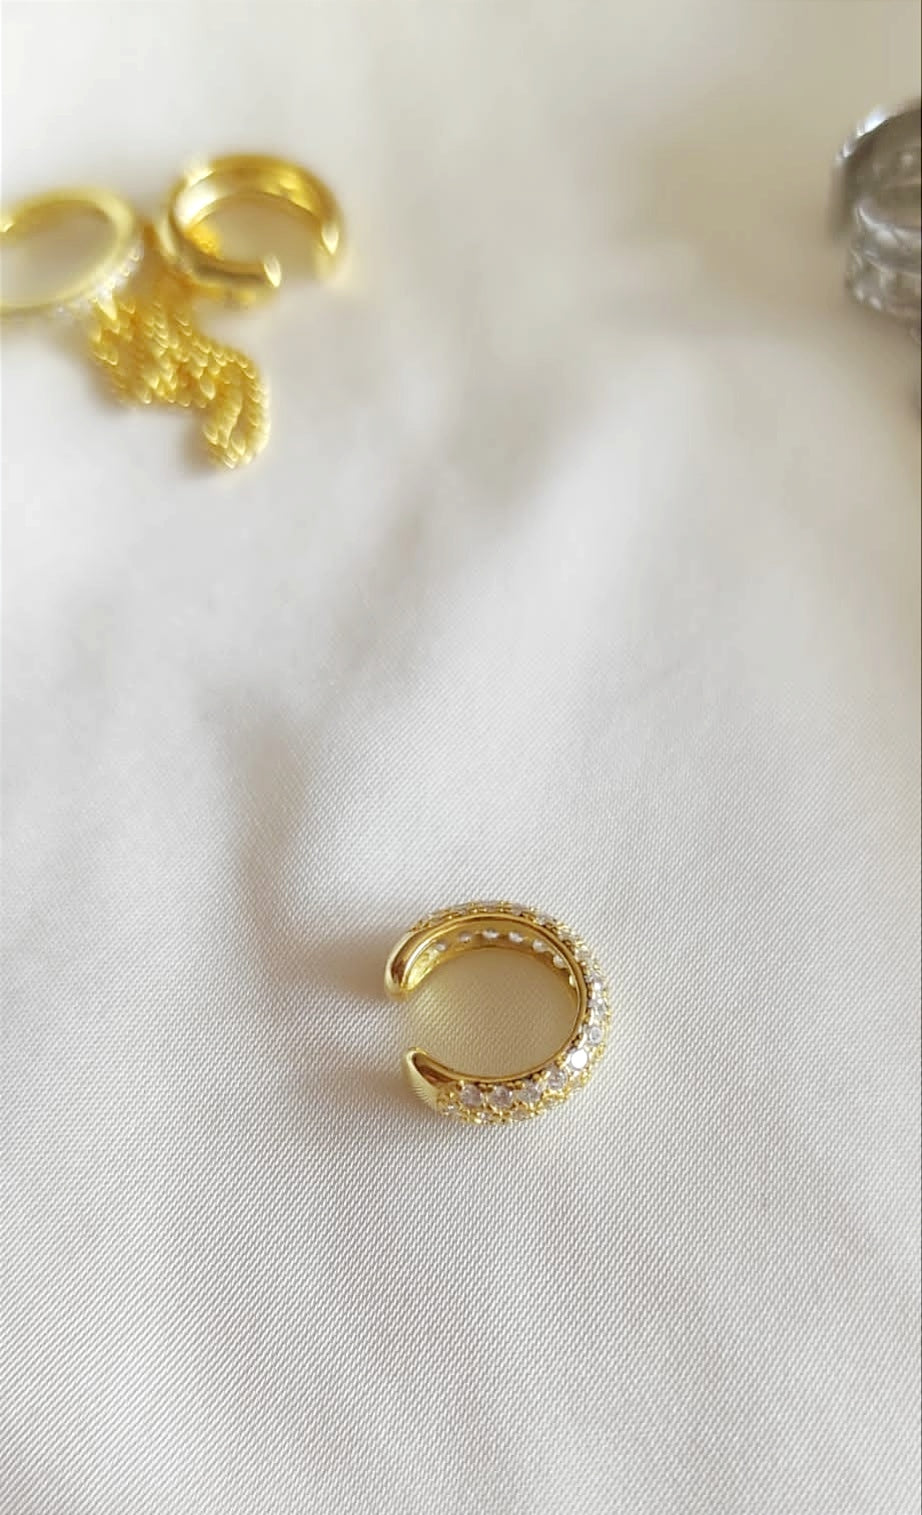 Zarter Ear Cuff FANTASIA aus 925er Silber vergoldet mit 18k Gold